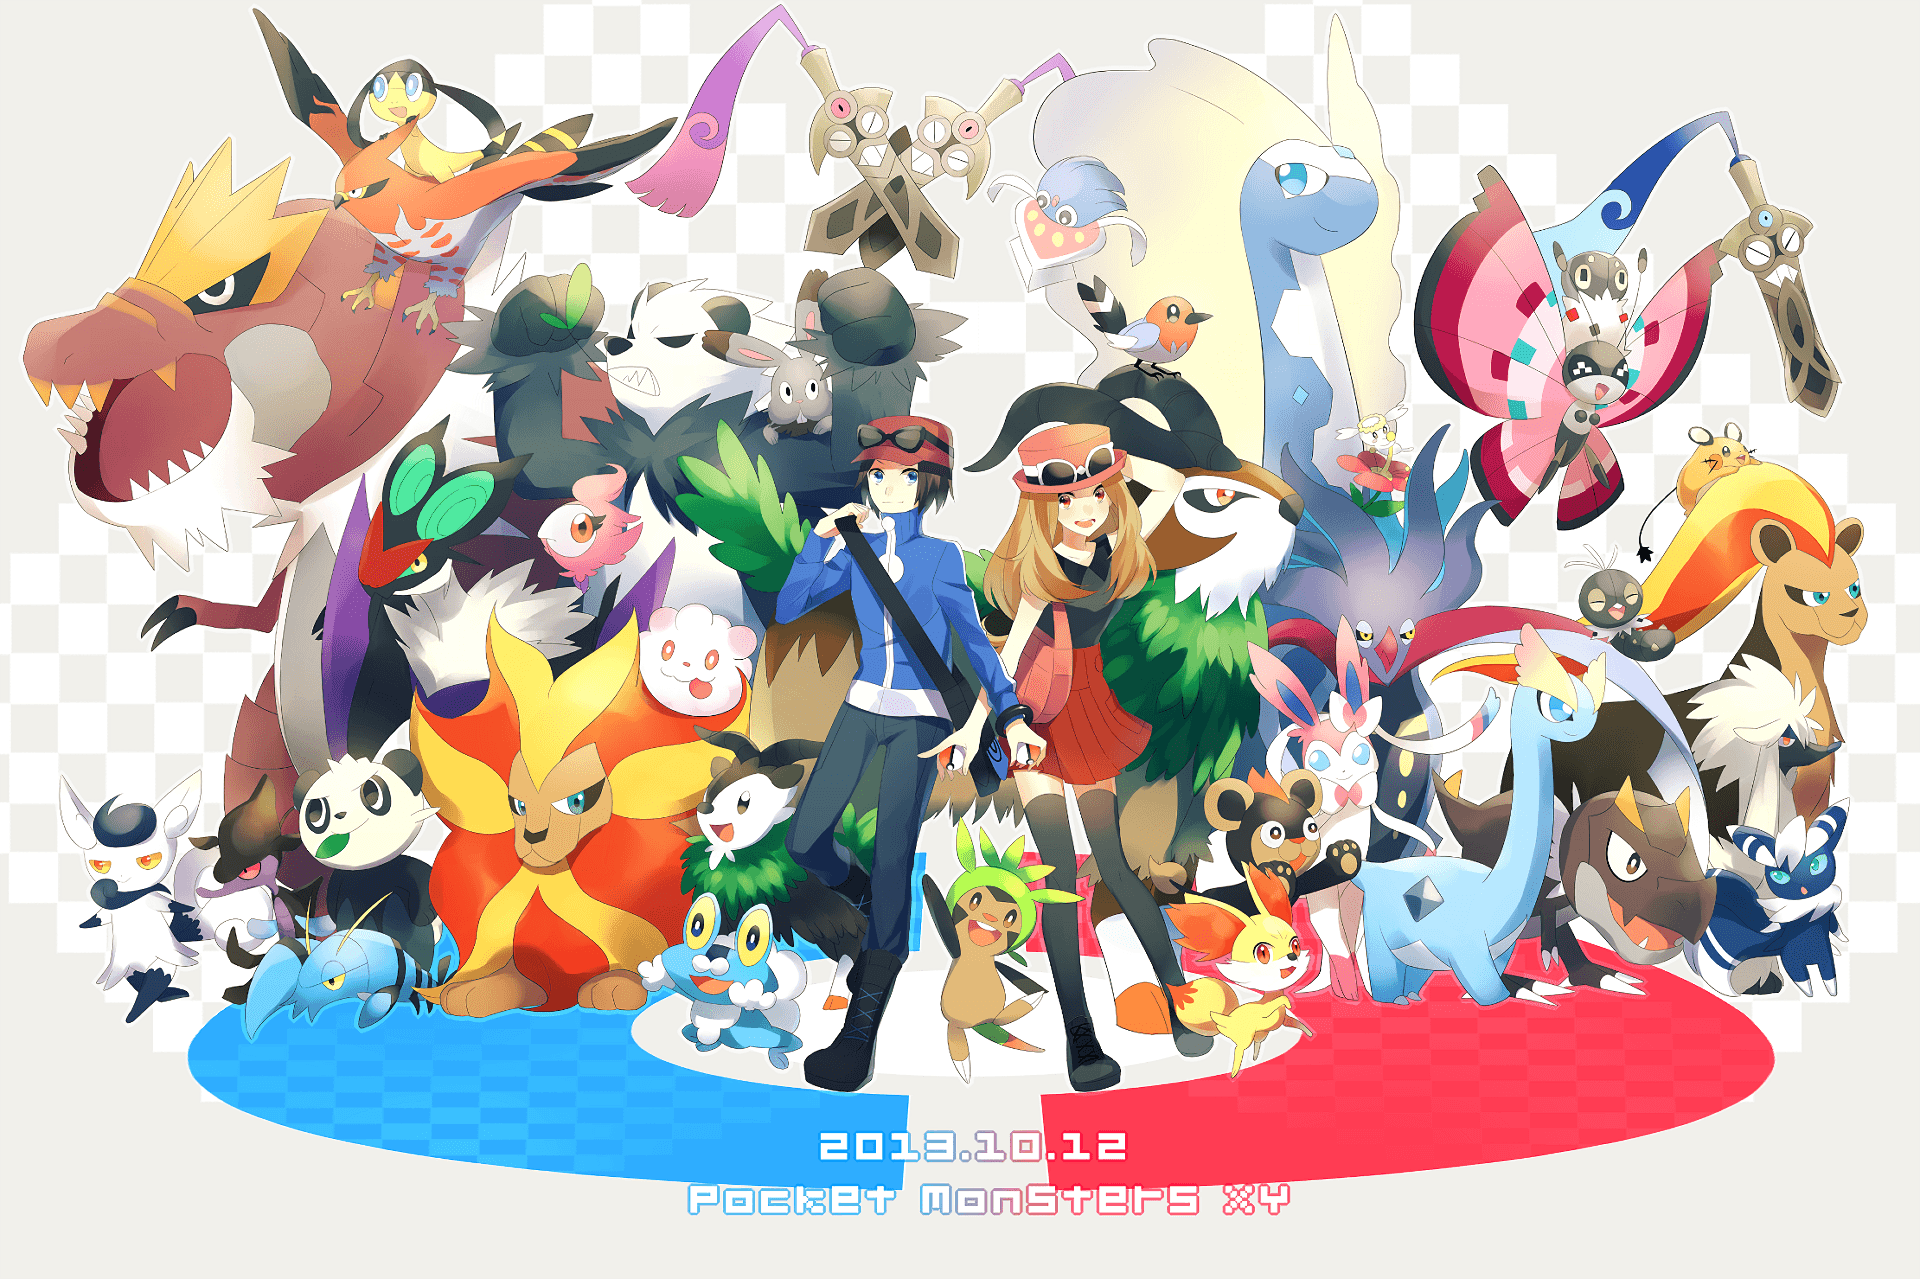 Fletchling (Pokémon) HD Wallpaper and Background Image